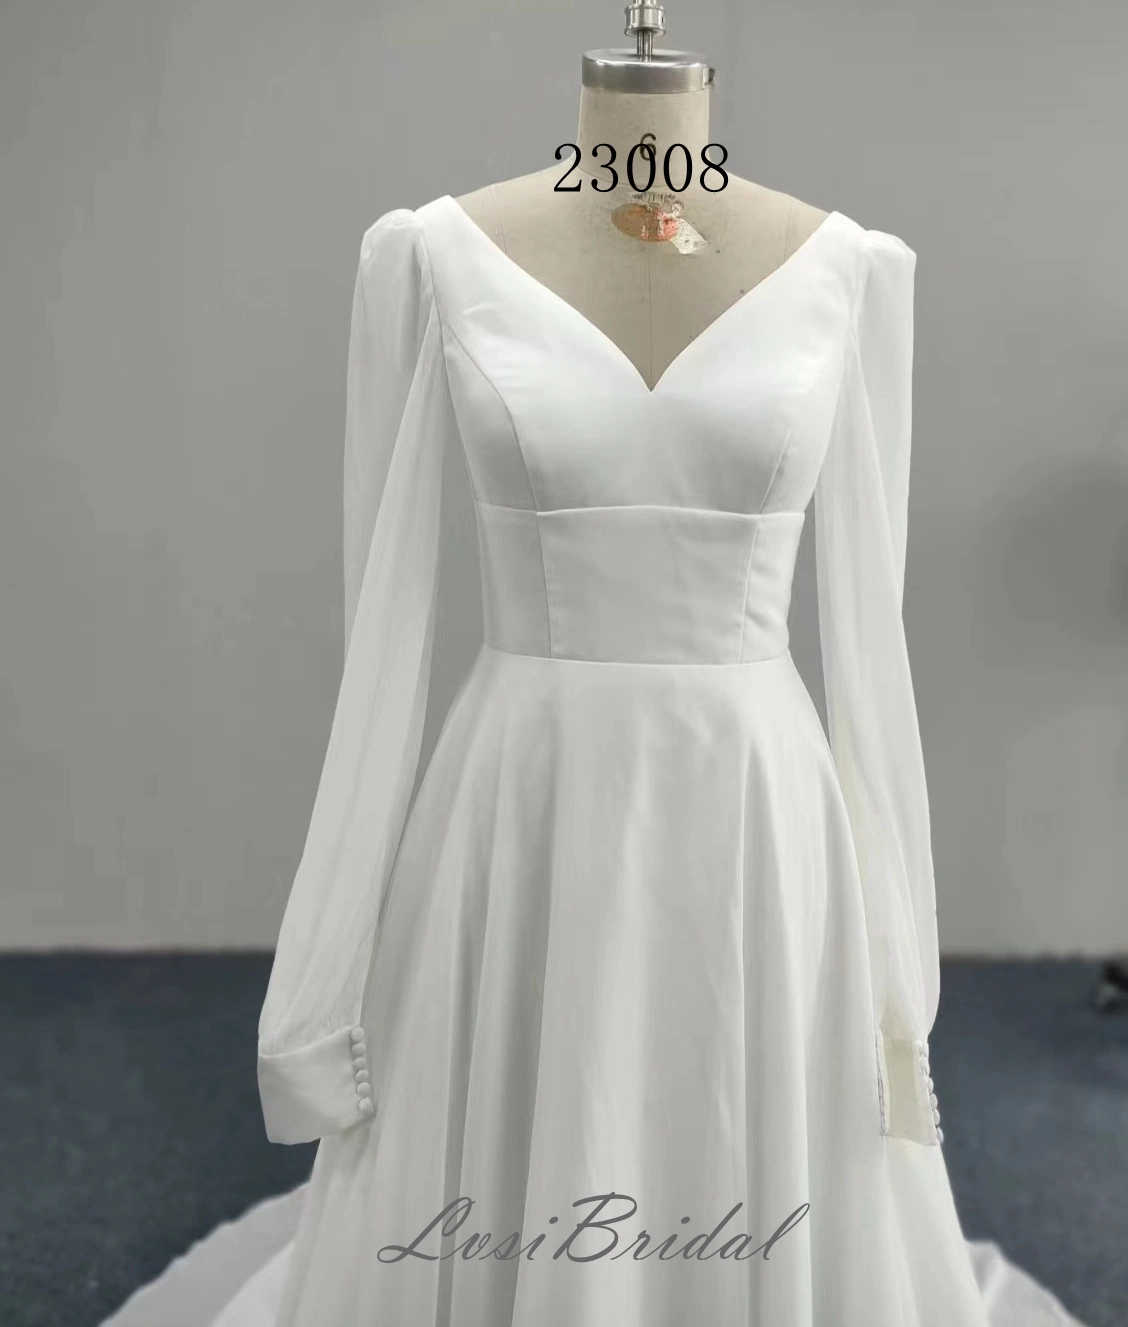 23008 V Neckline Plain Chiffon Fabric Wedding Dress with A-Line Skirt Dress Evening Dress Foreign Trade Simple Style